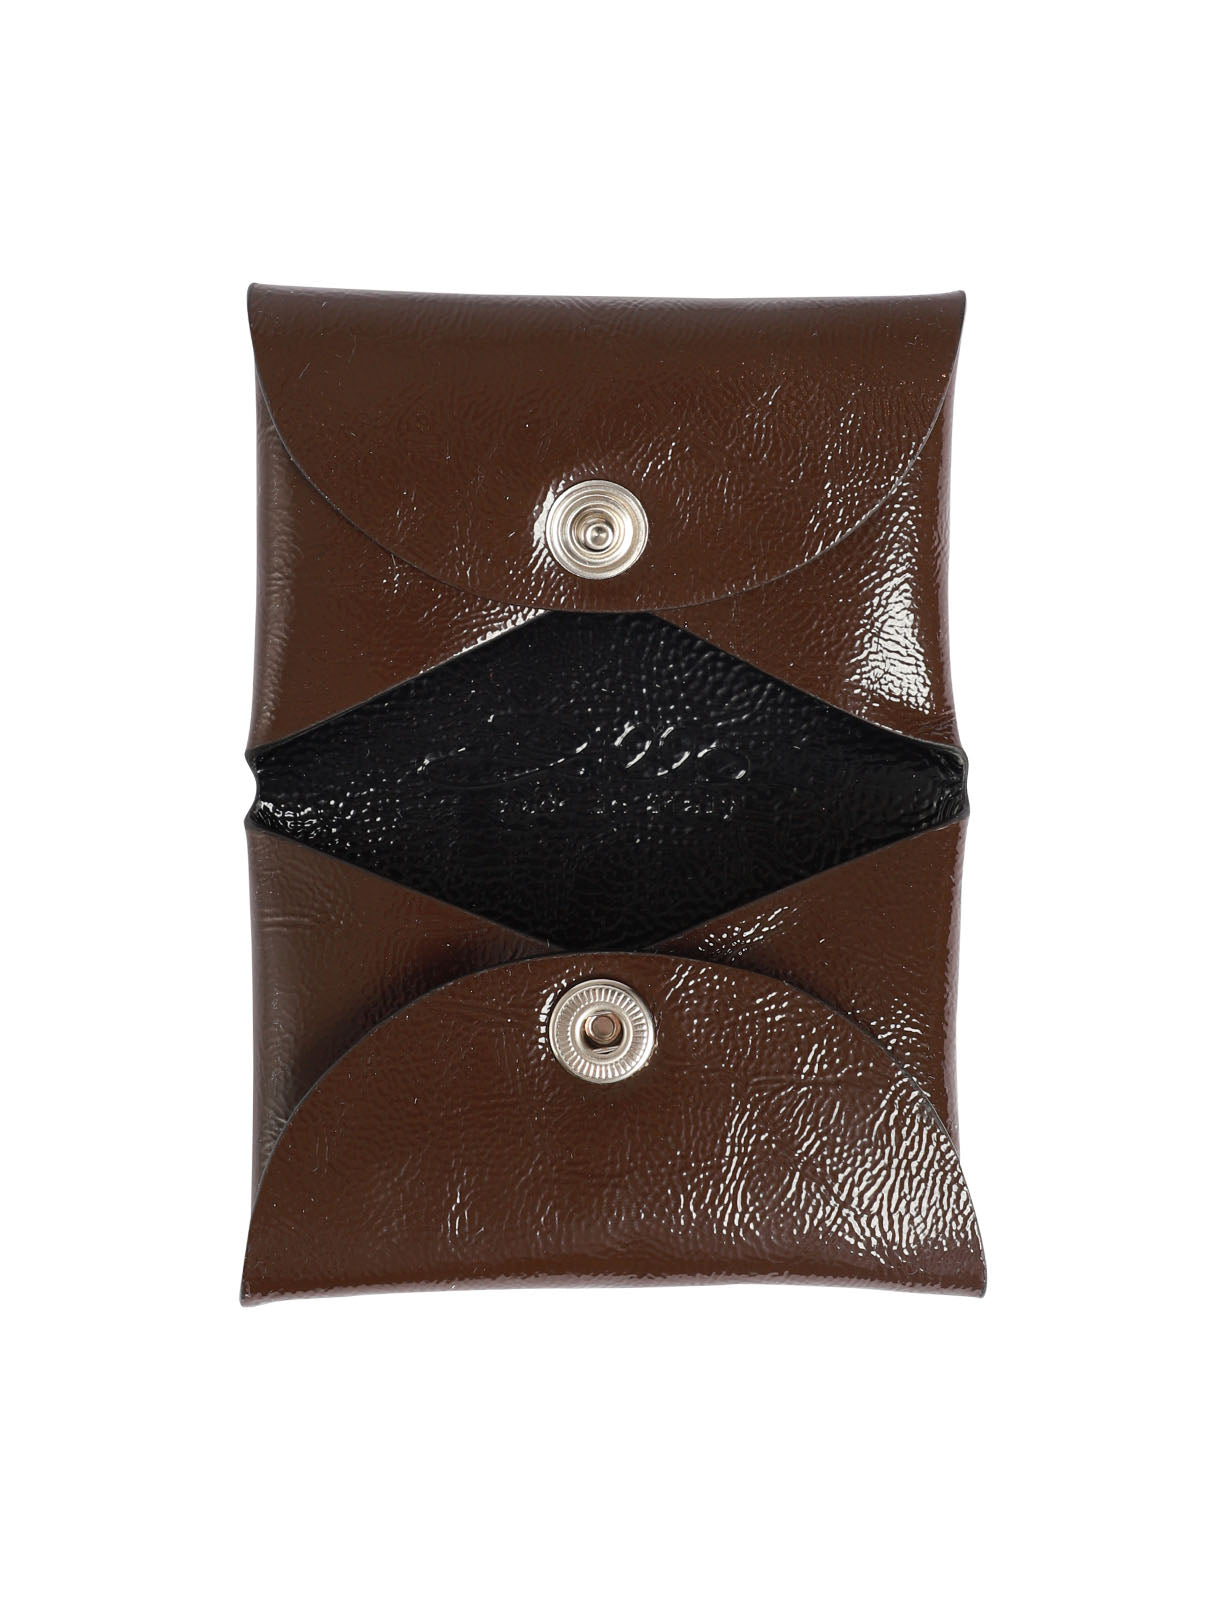 Leather Mini Wallet